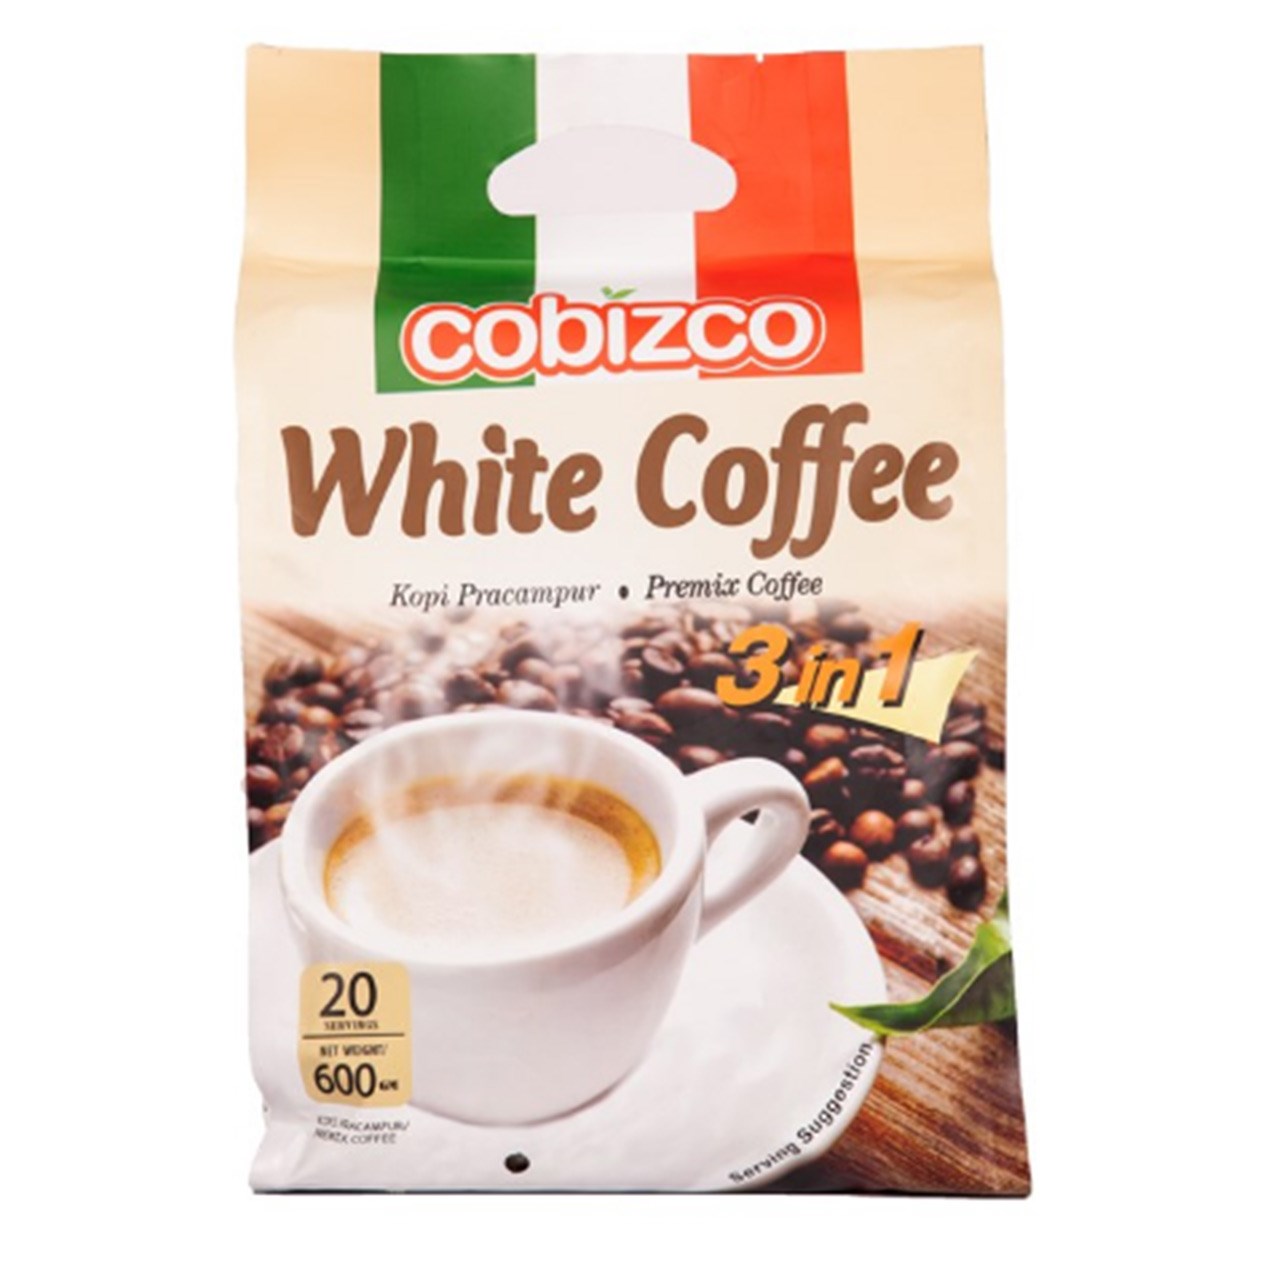 کافی کوبیزکو مدل White Coffee